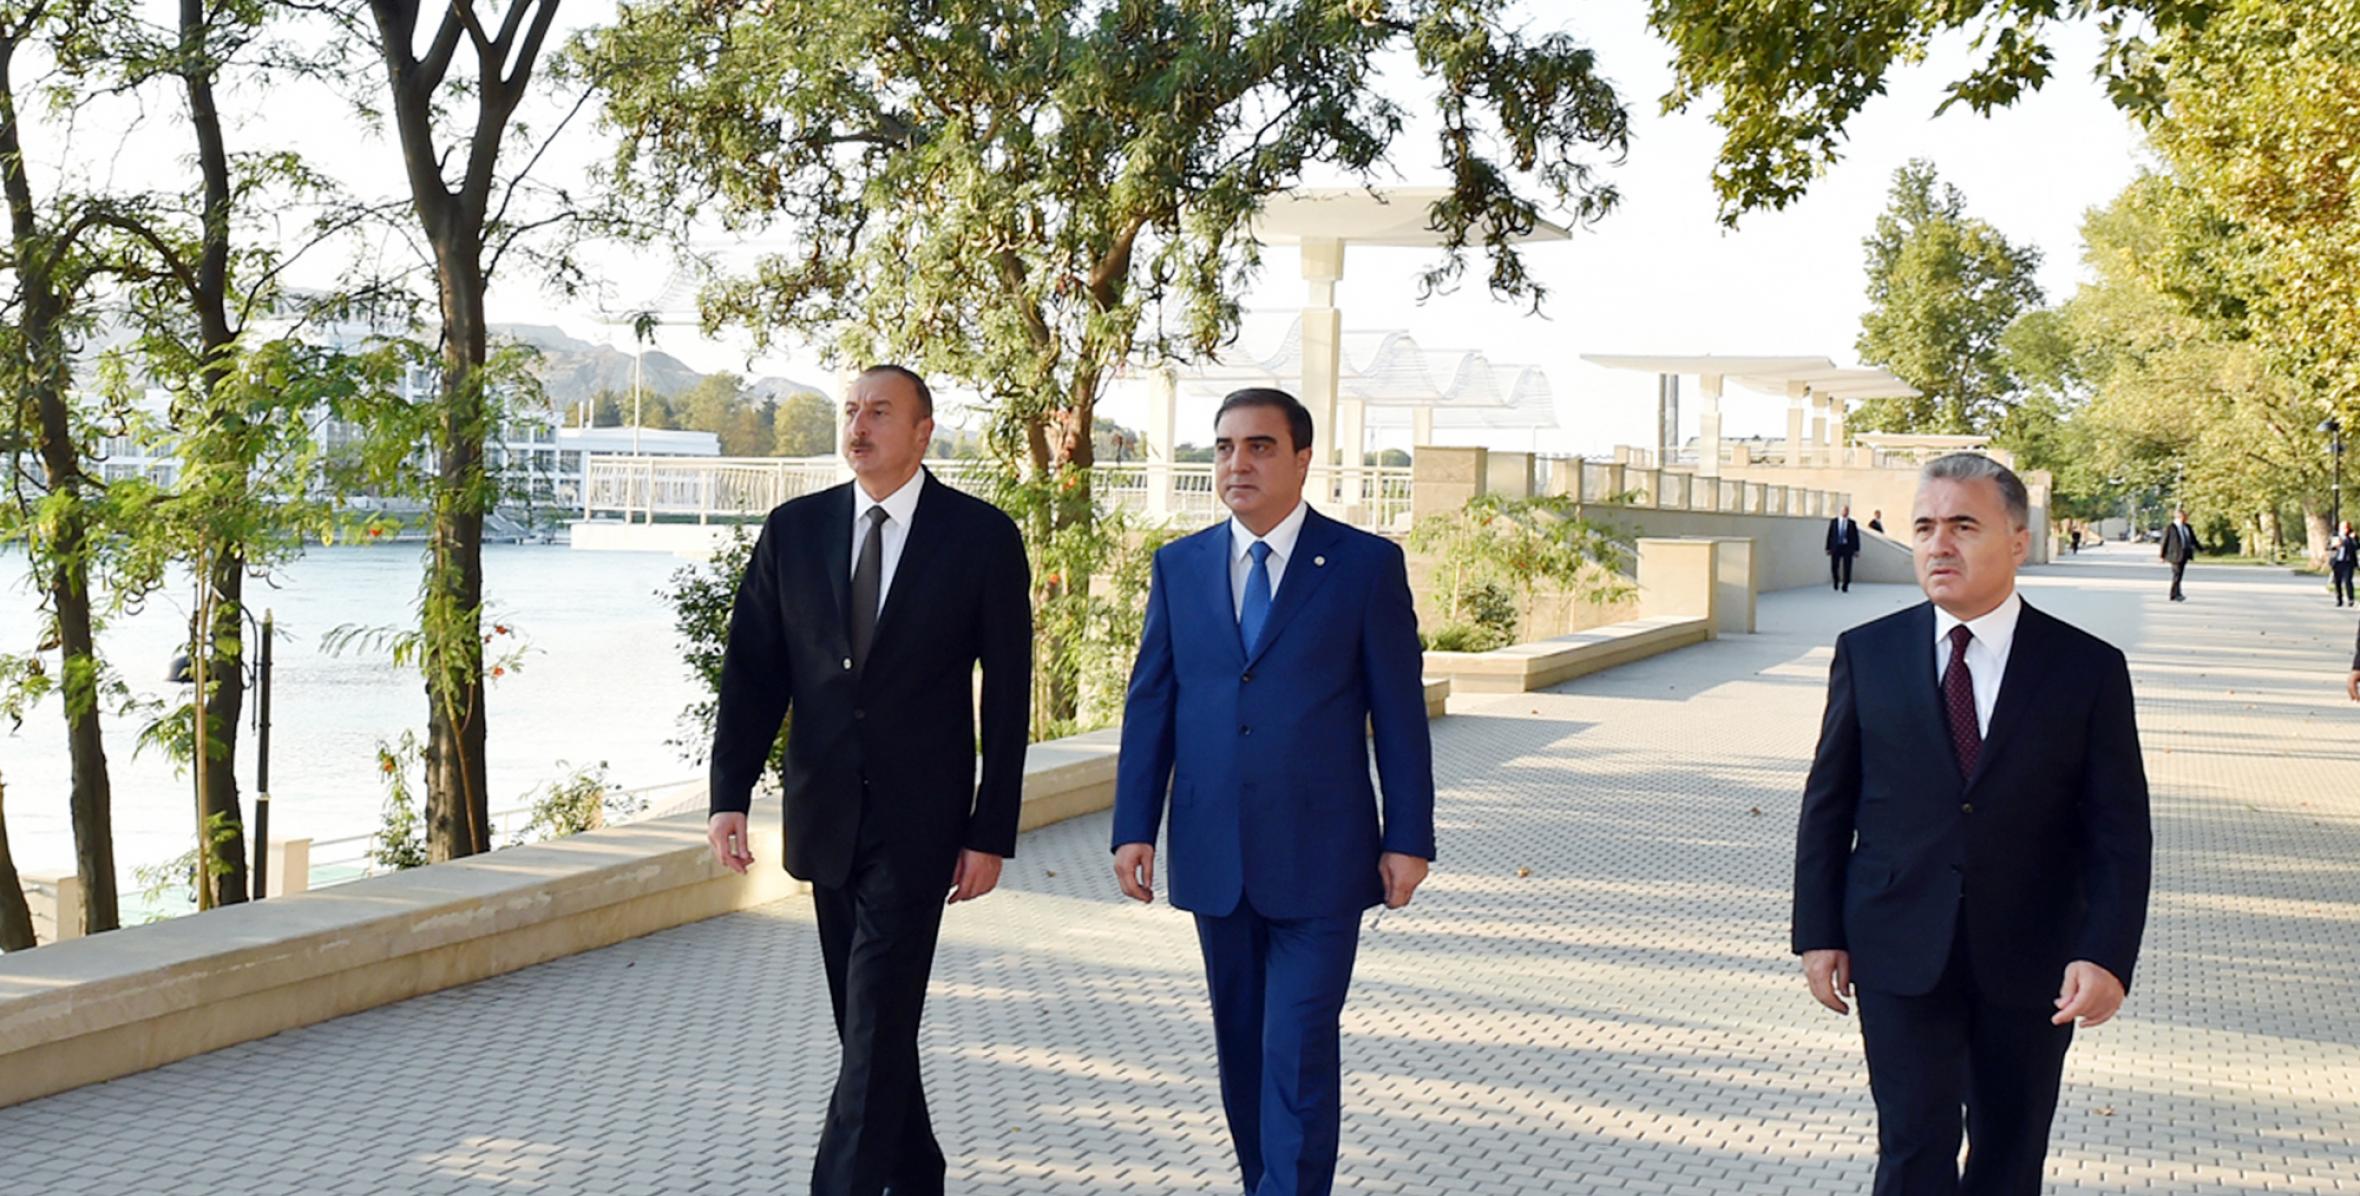 Ilham Aliyev viewed landscaping and construction work in Mingachevir